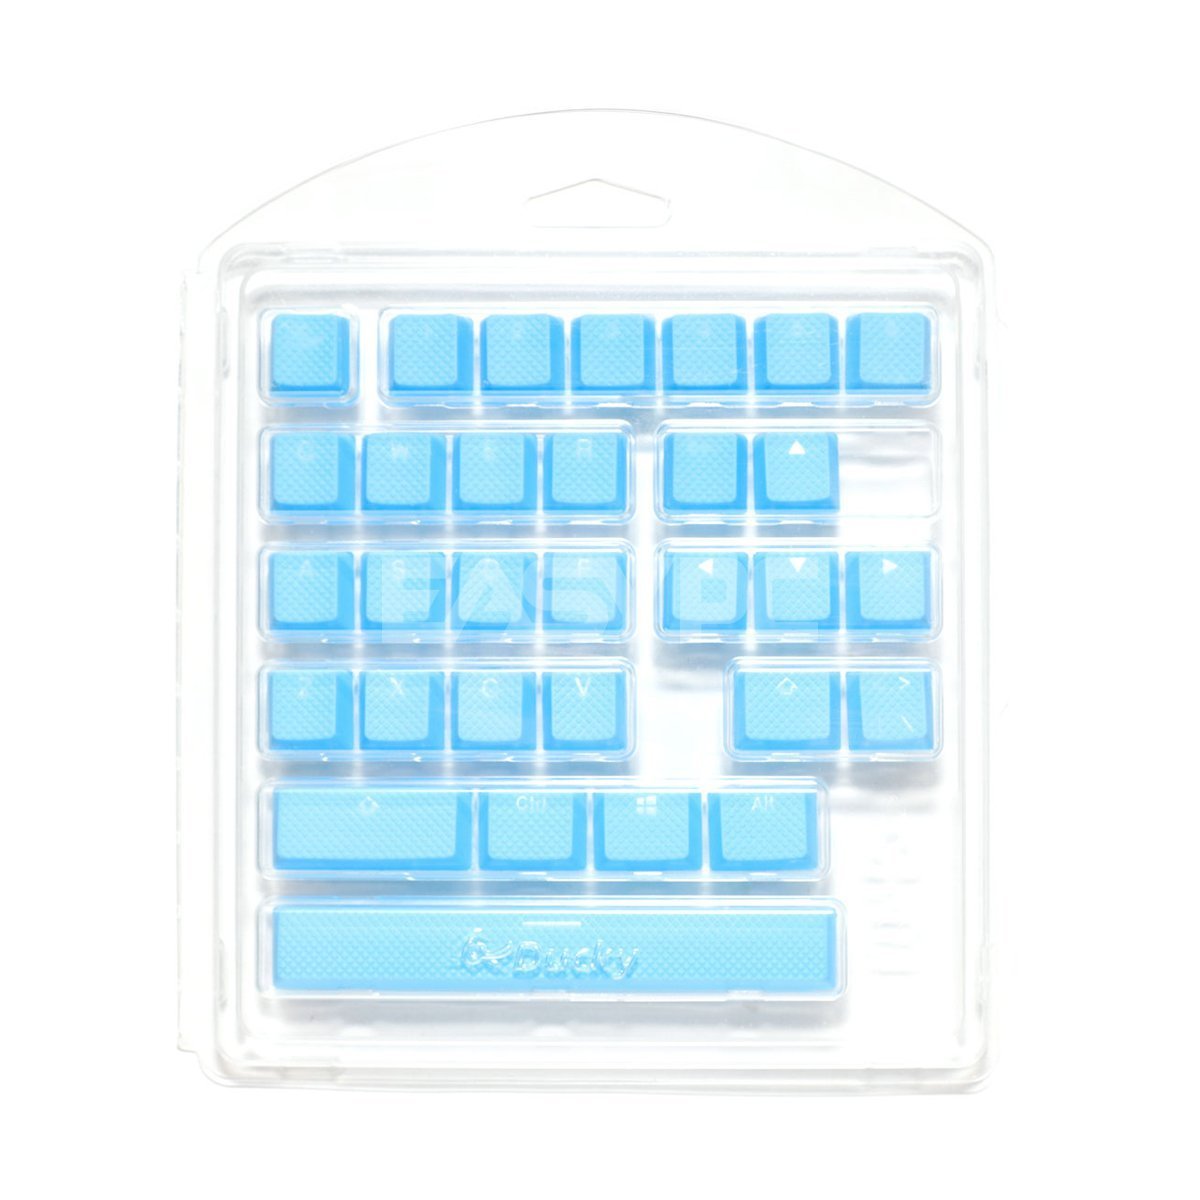 Ducky Seamless Doubleshot Rubber 31 Keycap Set - Blue - Store 974 | ستور ٩٧٤